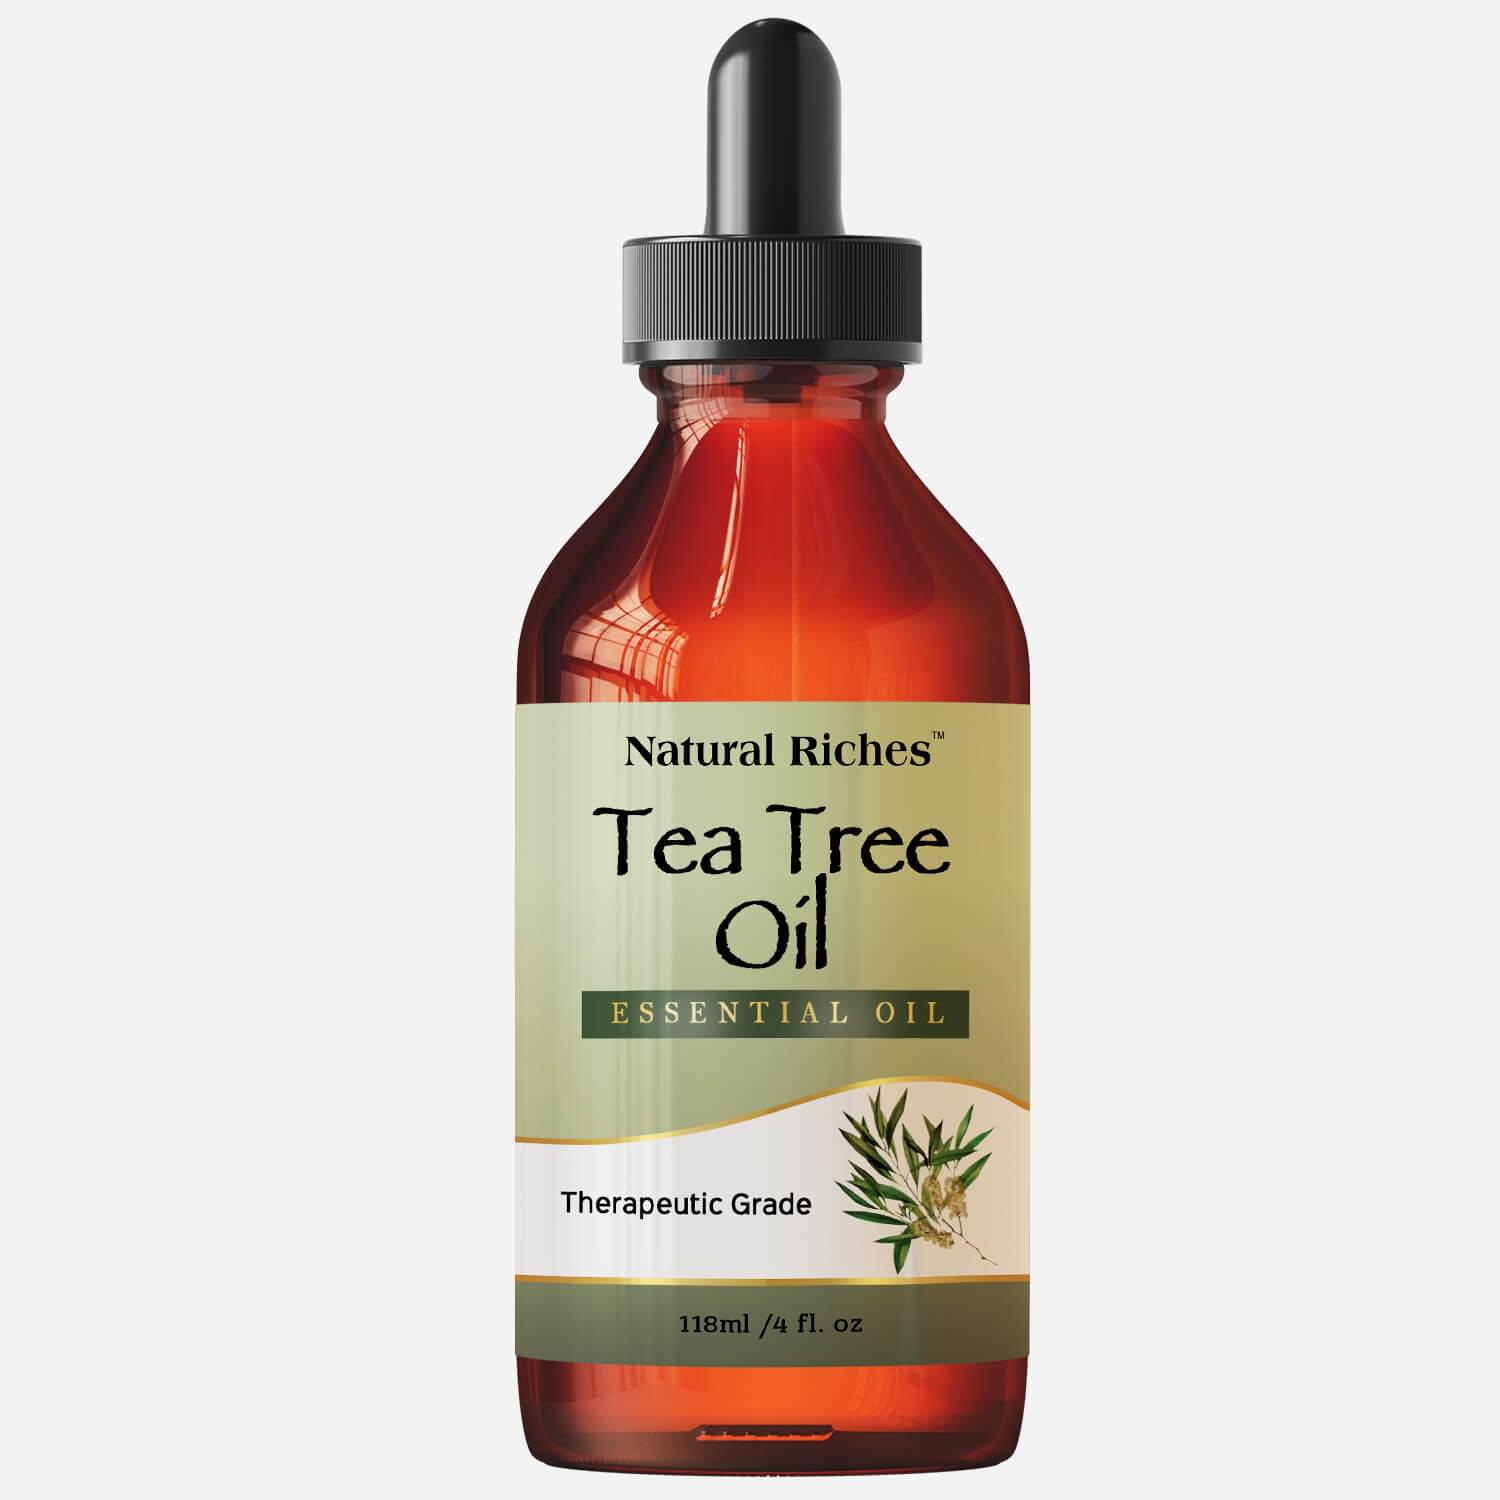 Natural Riches Tea Tree Oil - Pure Tea Tree Essential Oil 4fl